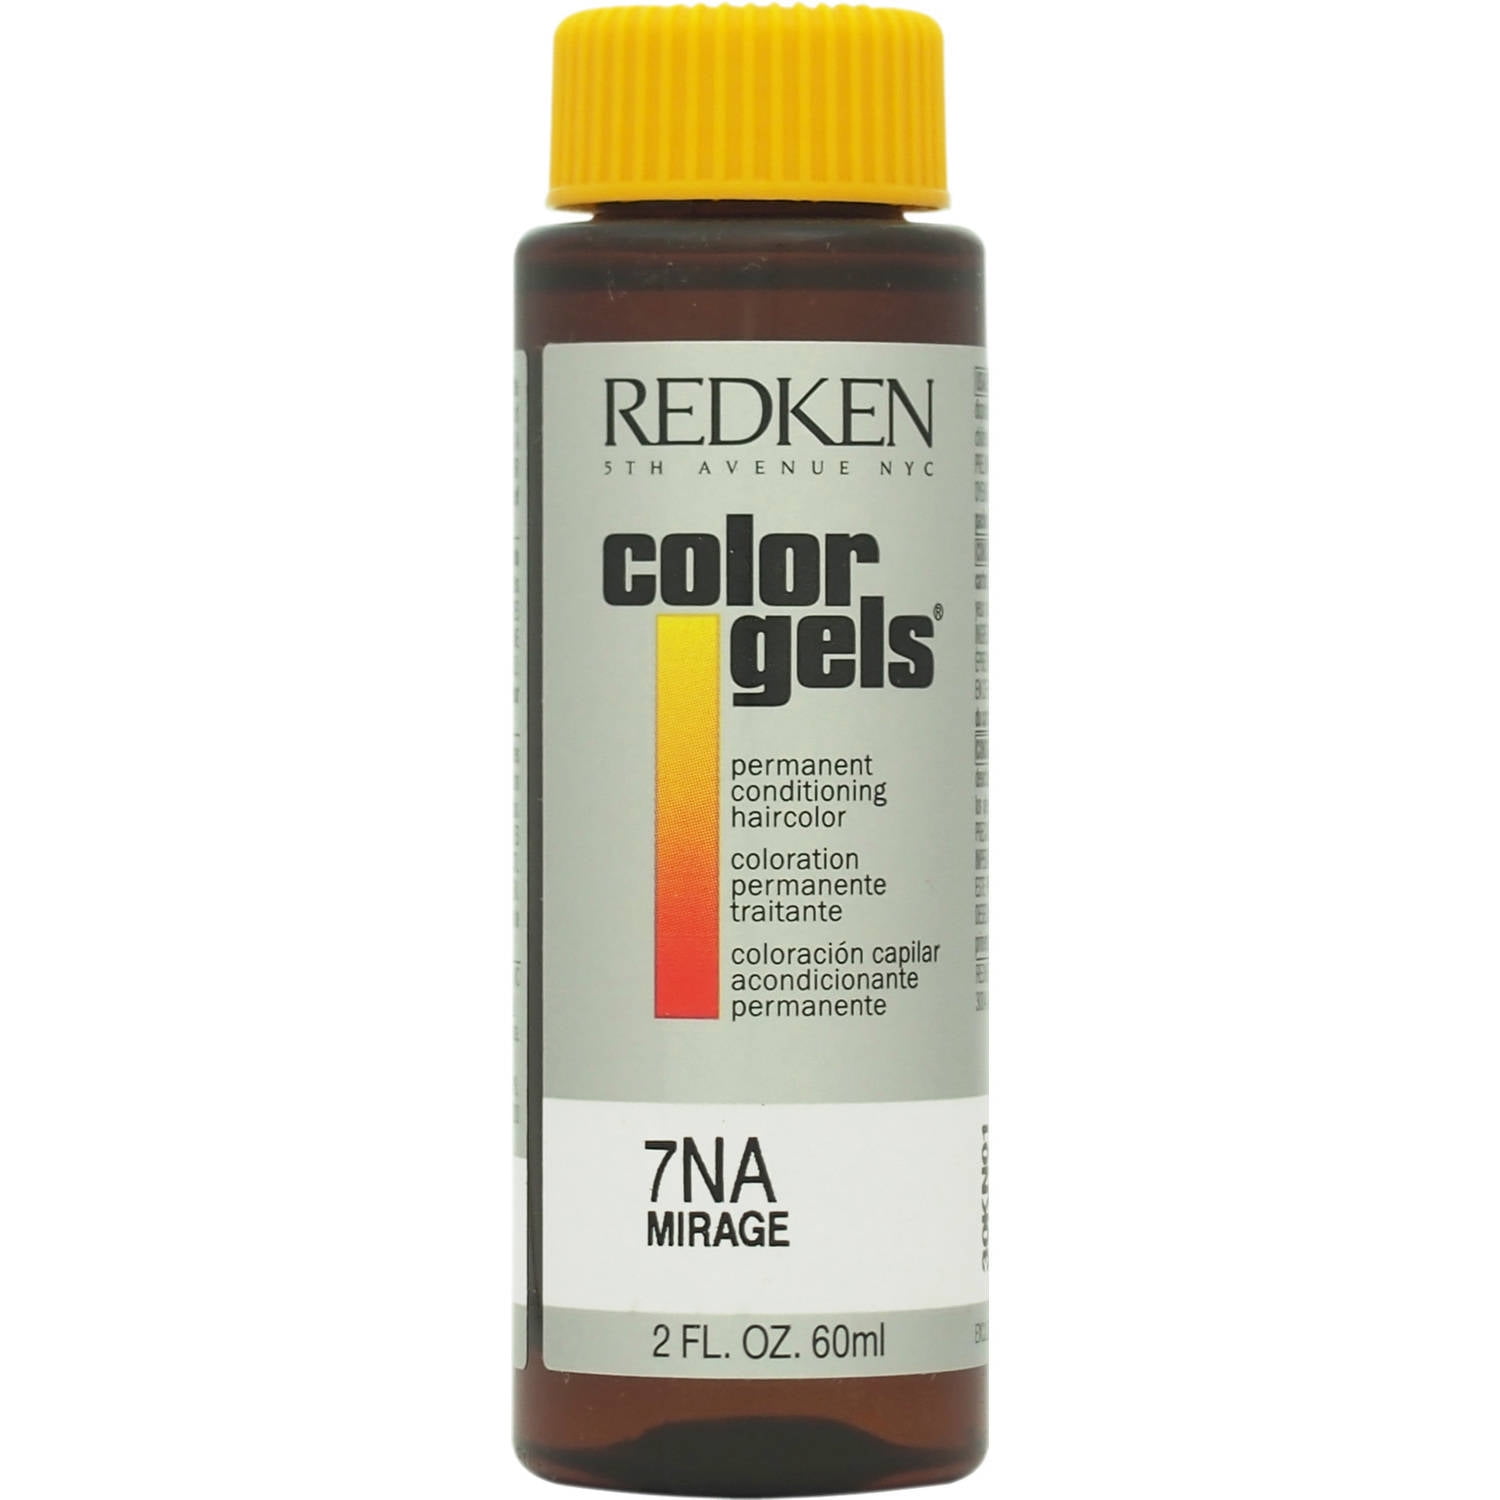 redken-redken-color-gels-permanent-conditioner-haircolor-7na-mirage